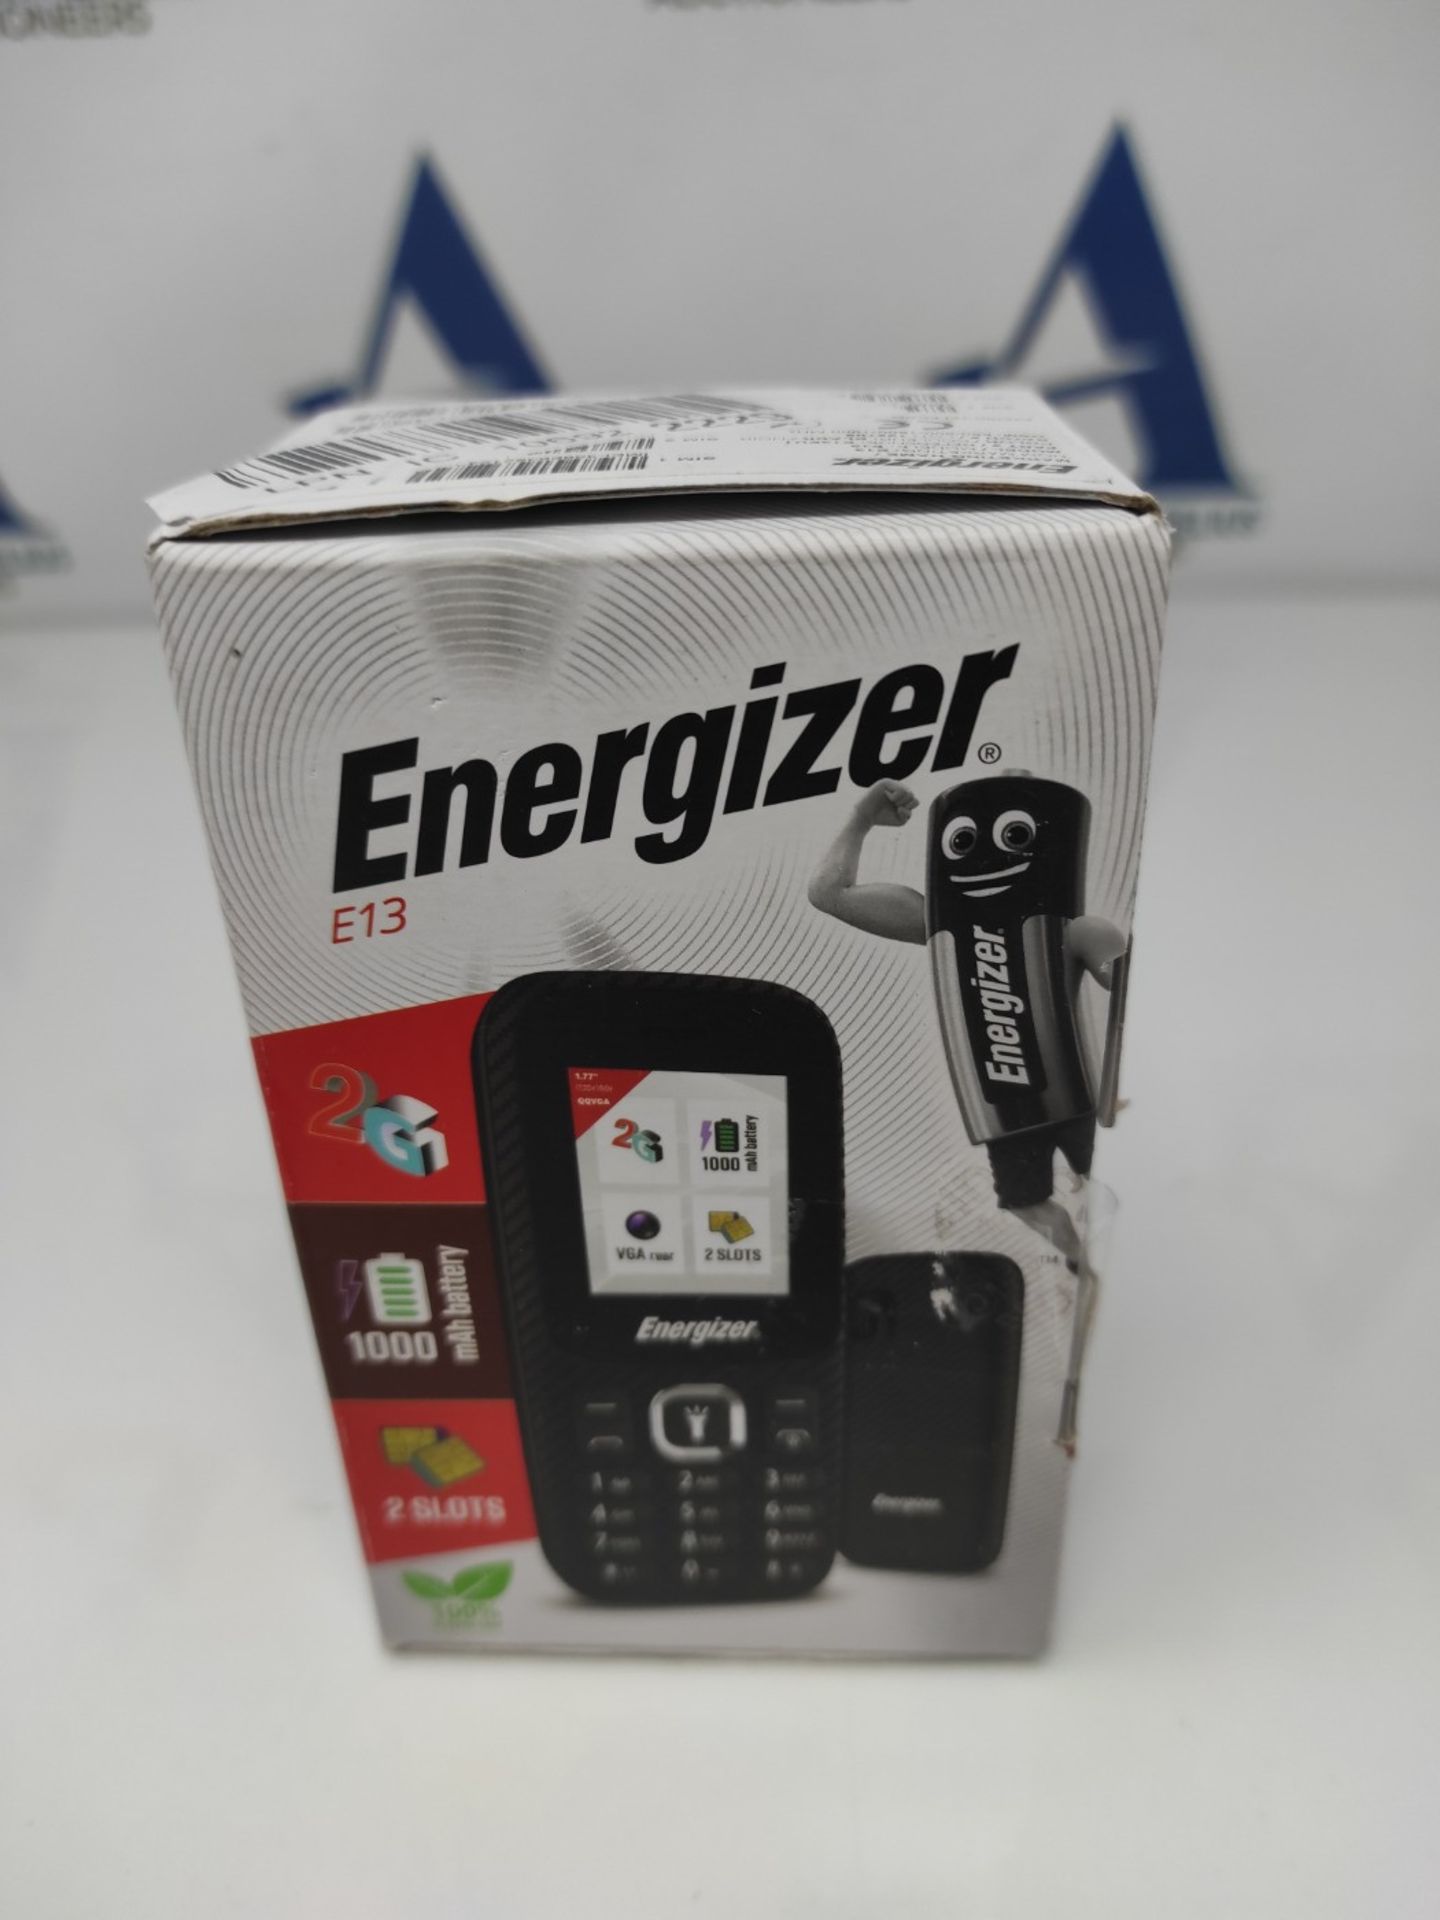 Energizer - Mobile E13-2G - Dual Sim Mobile Phone - Black - Mini SIM - Unlocked - Torc - Image 2 of 6